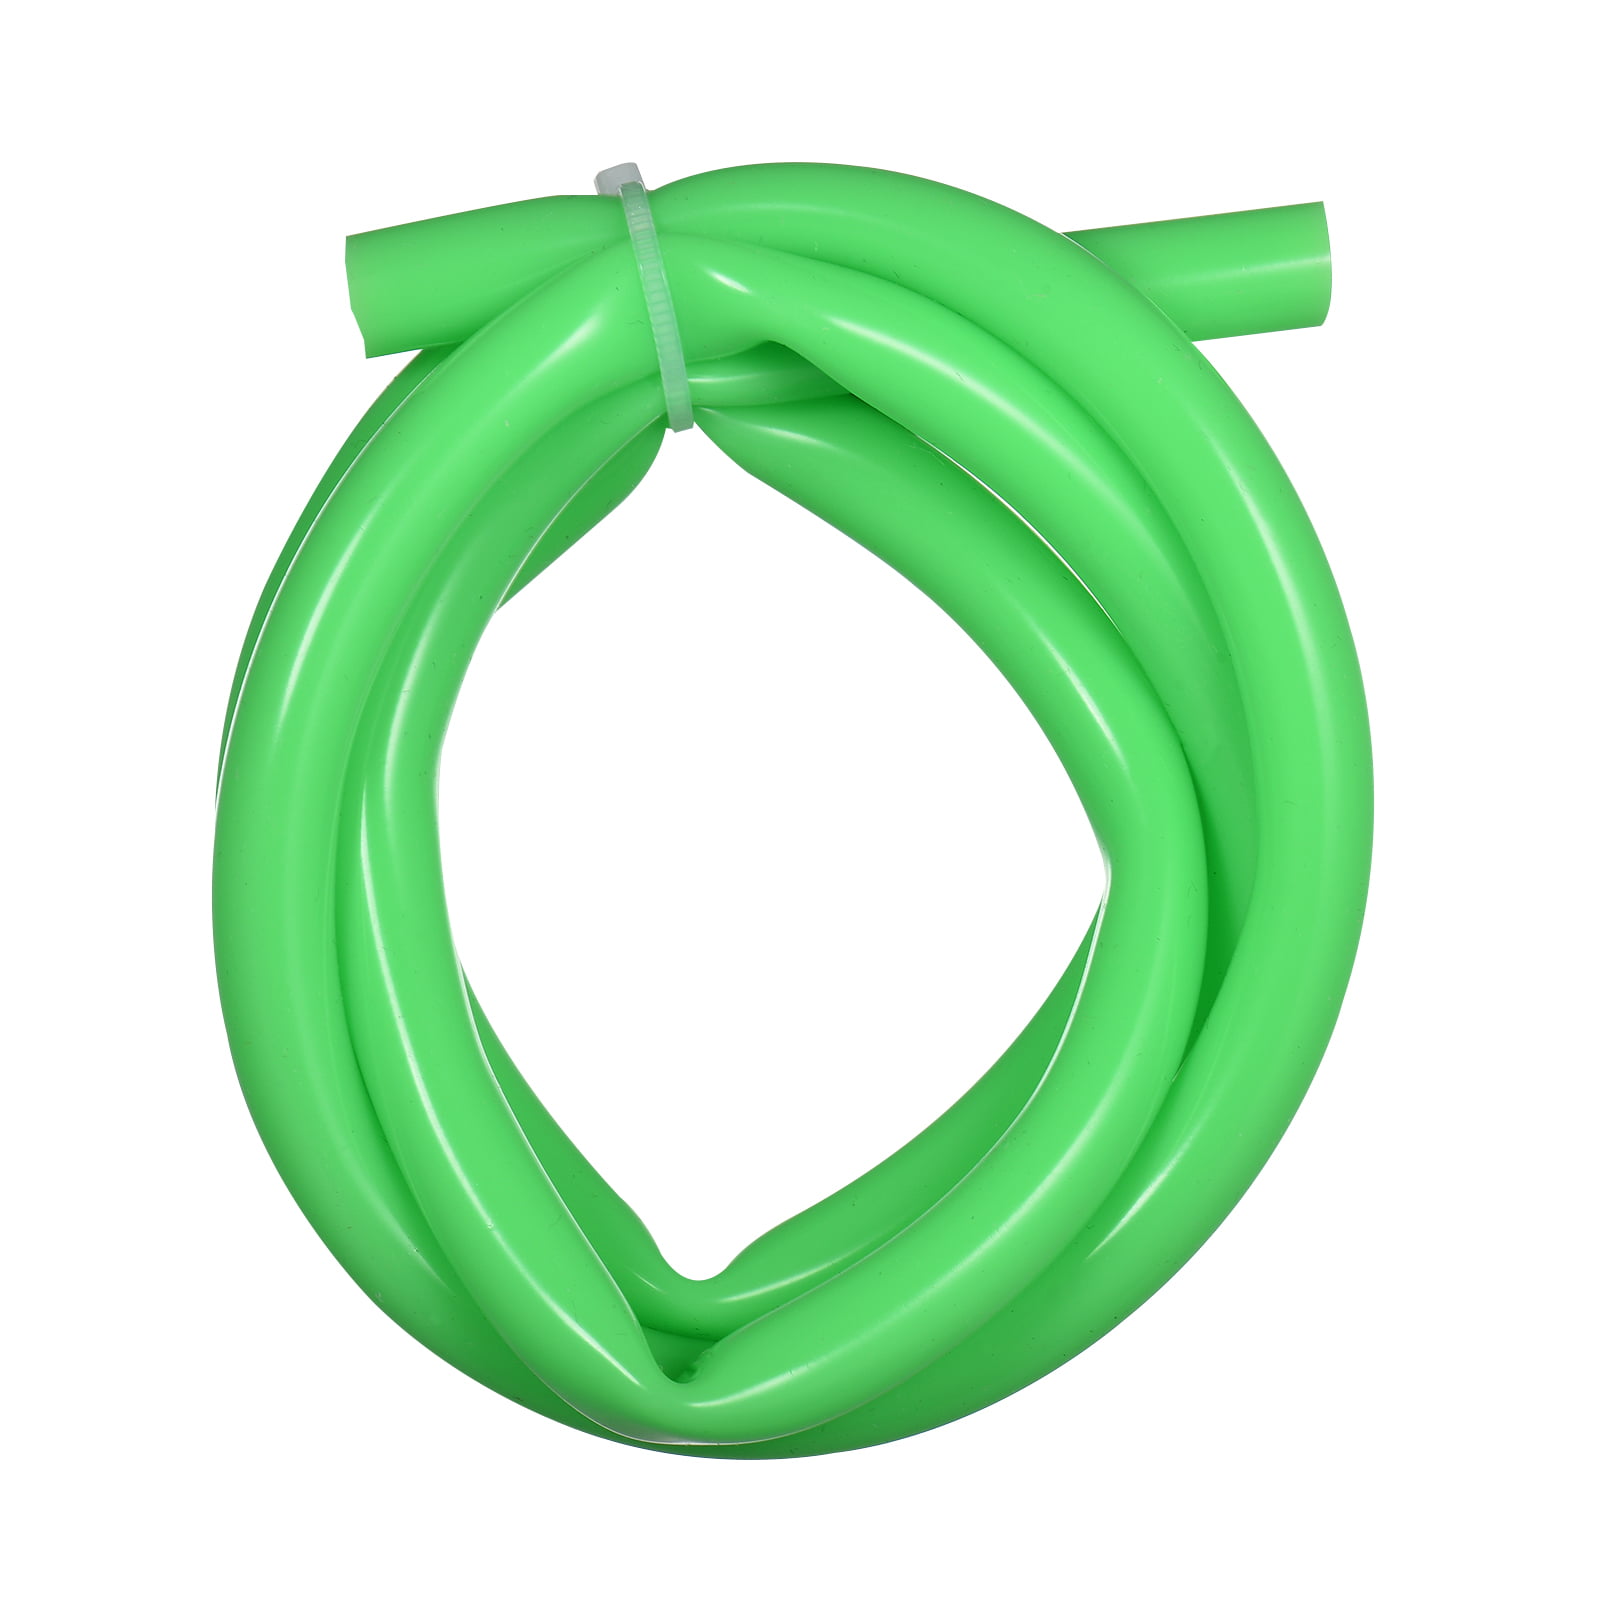 Bright green Food Grade Silicone Rubber Flexible Tubing High Temp Hose Tube 